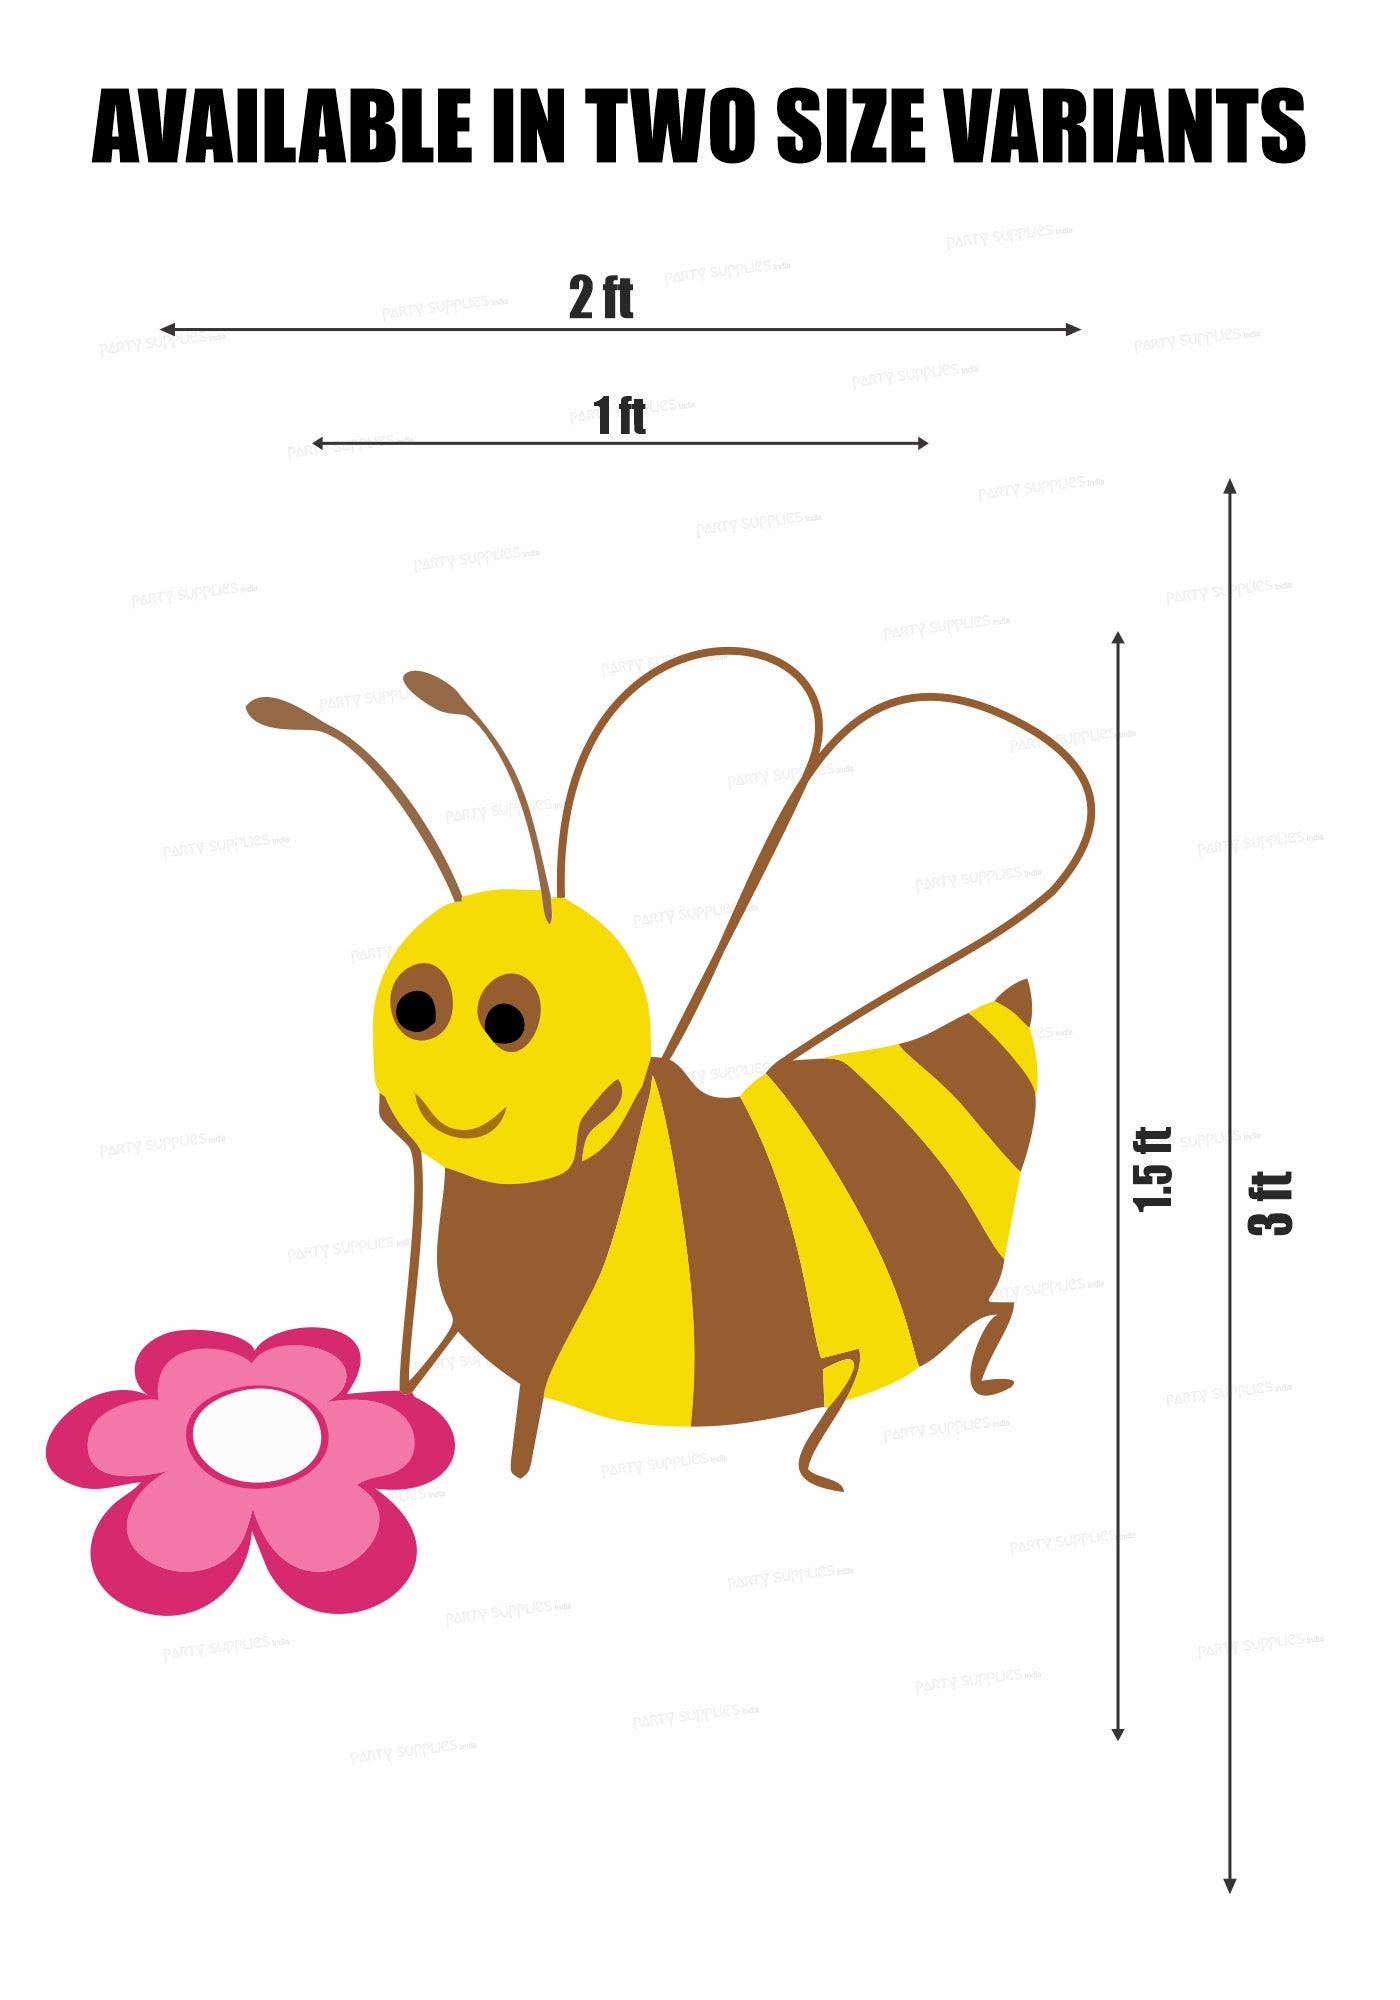 PSI Bumble Bee Theme Cutout - 11